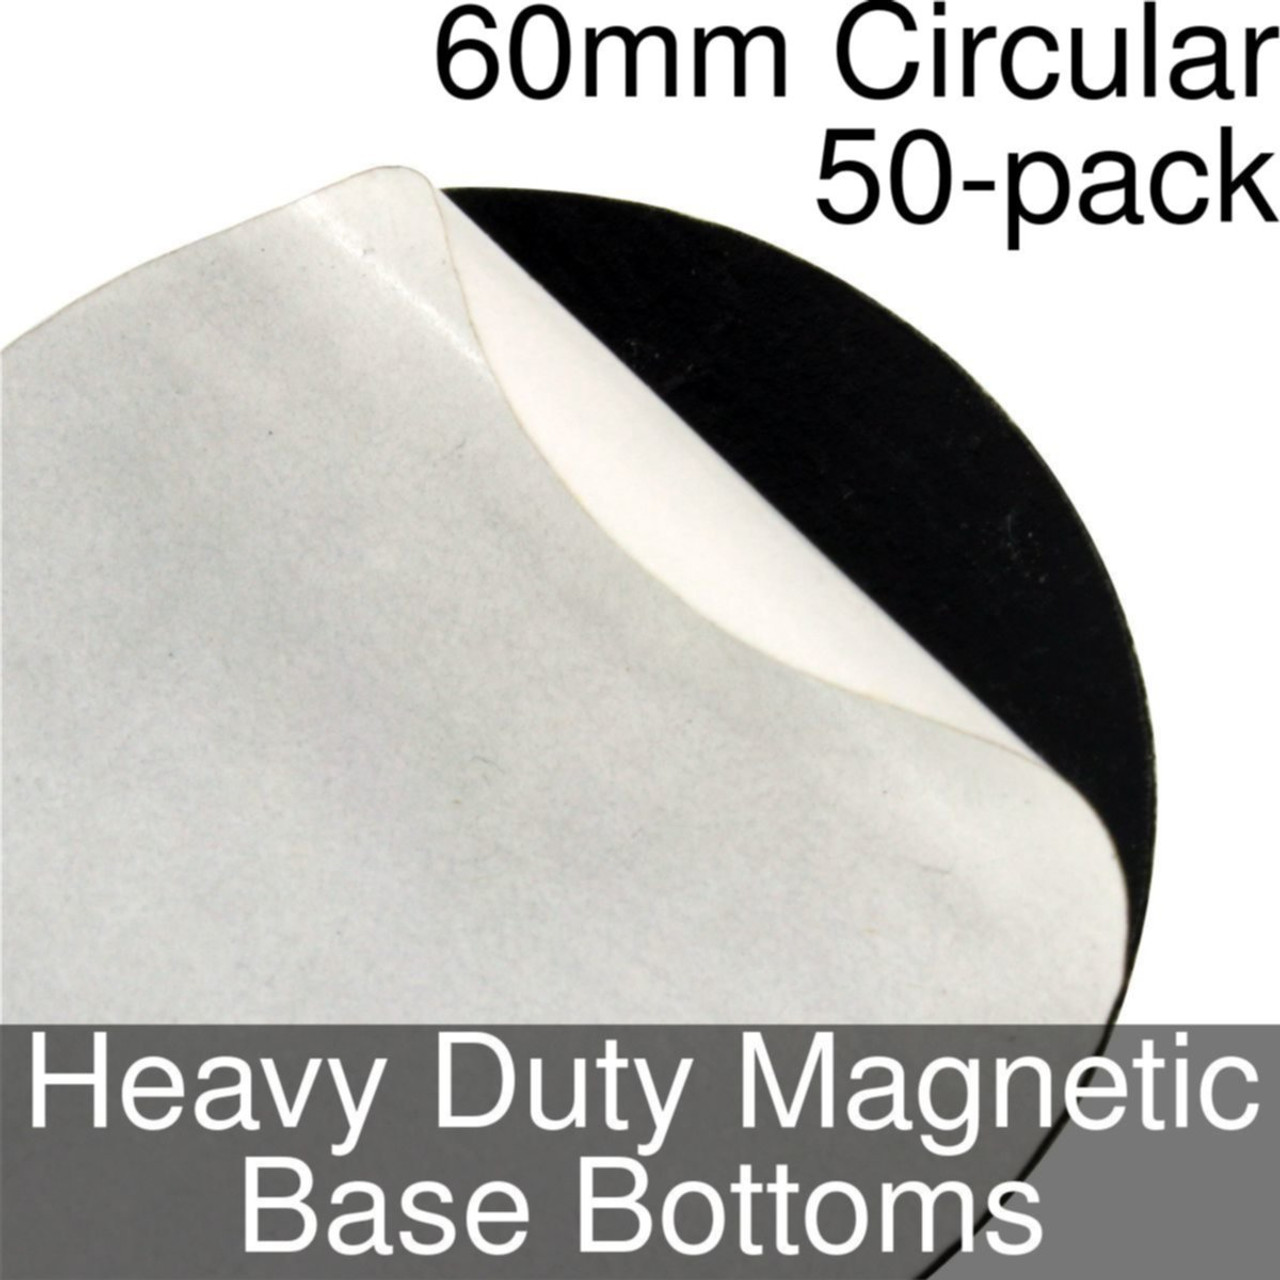 60mm Circular Self Adhesive Heavy Duty Magnetic Base Bottom 50 count